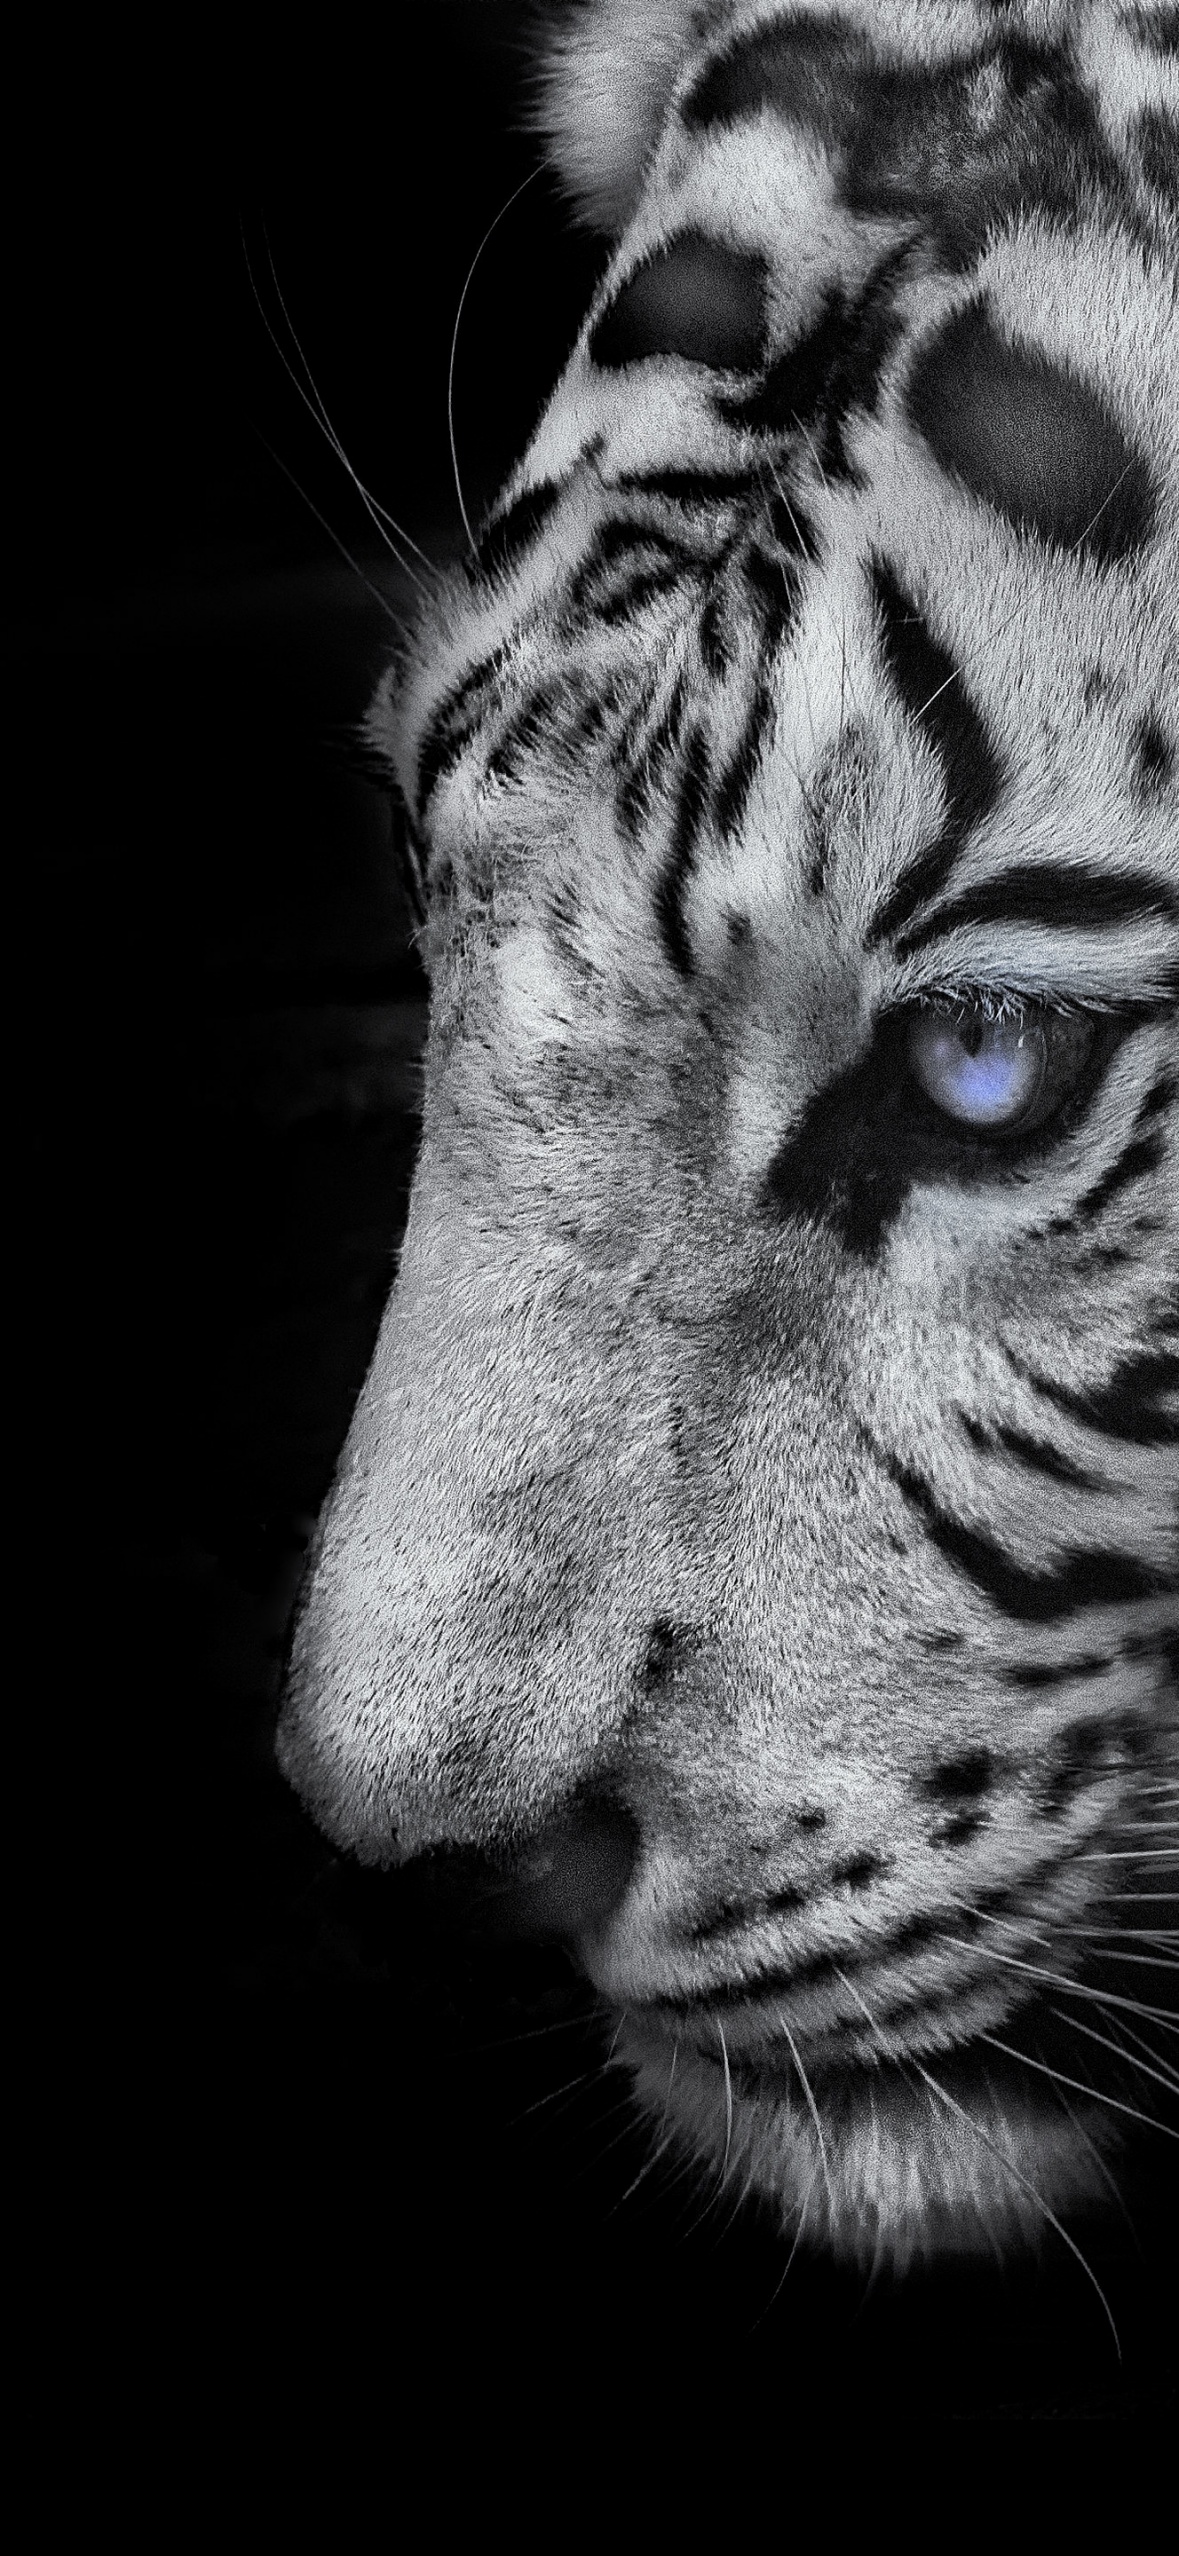 Download Tiger Head Black And White RoyaltyFree Stock Illustration Image   Pixabay